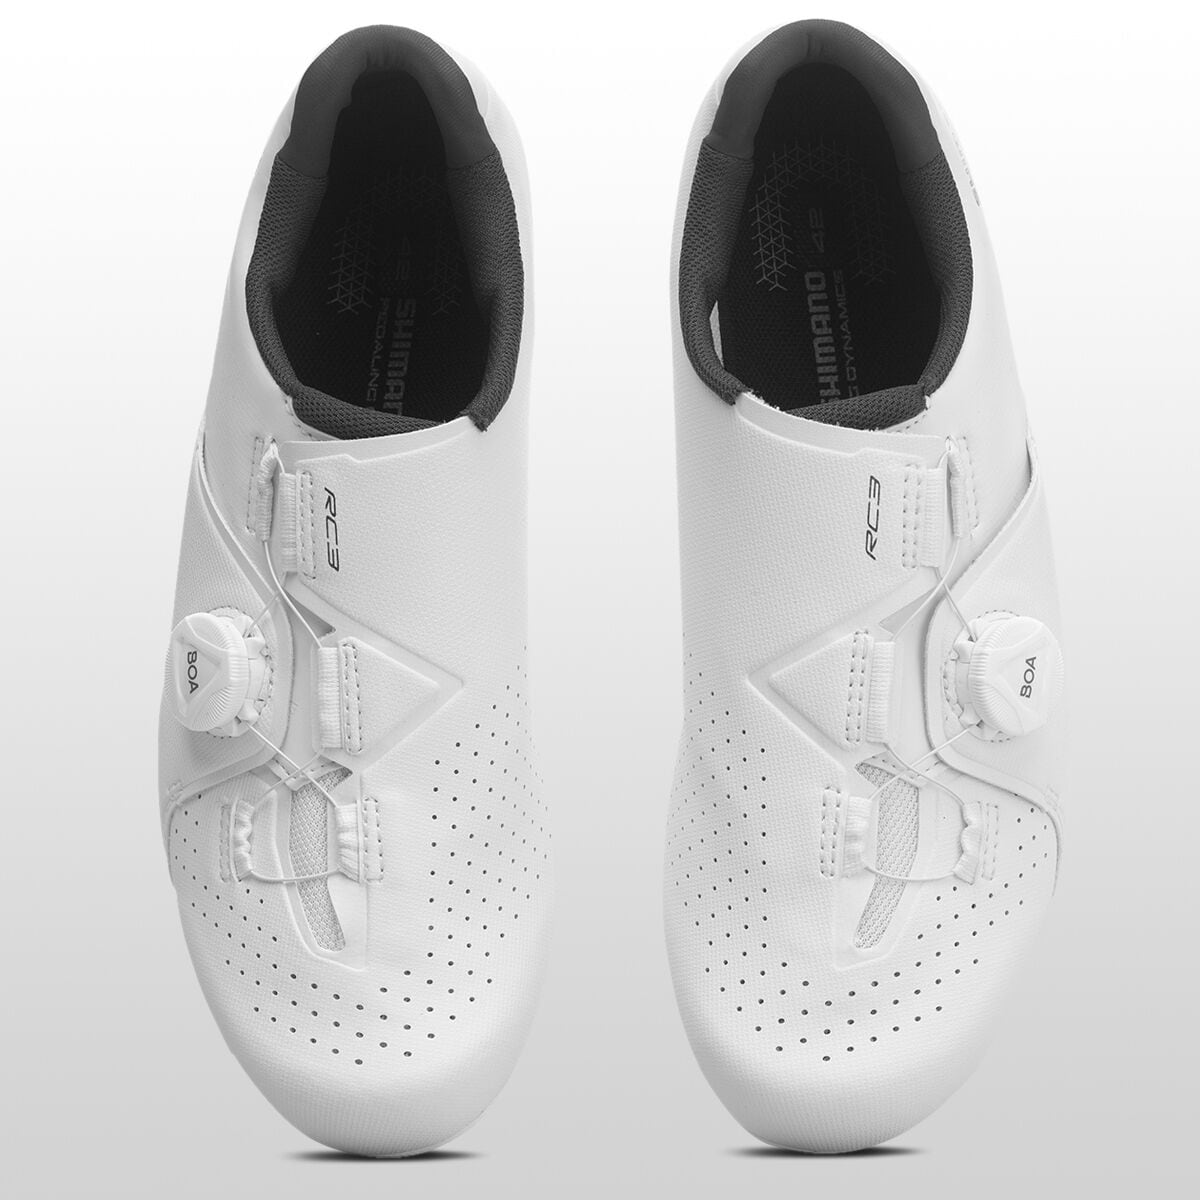 Shimano RC300 Limited Edition Cycling Shoe - Mens